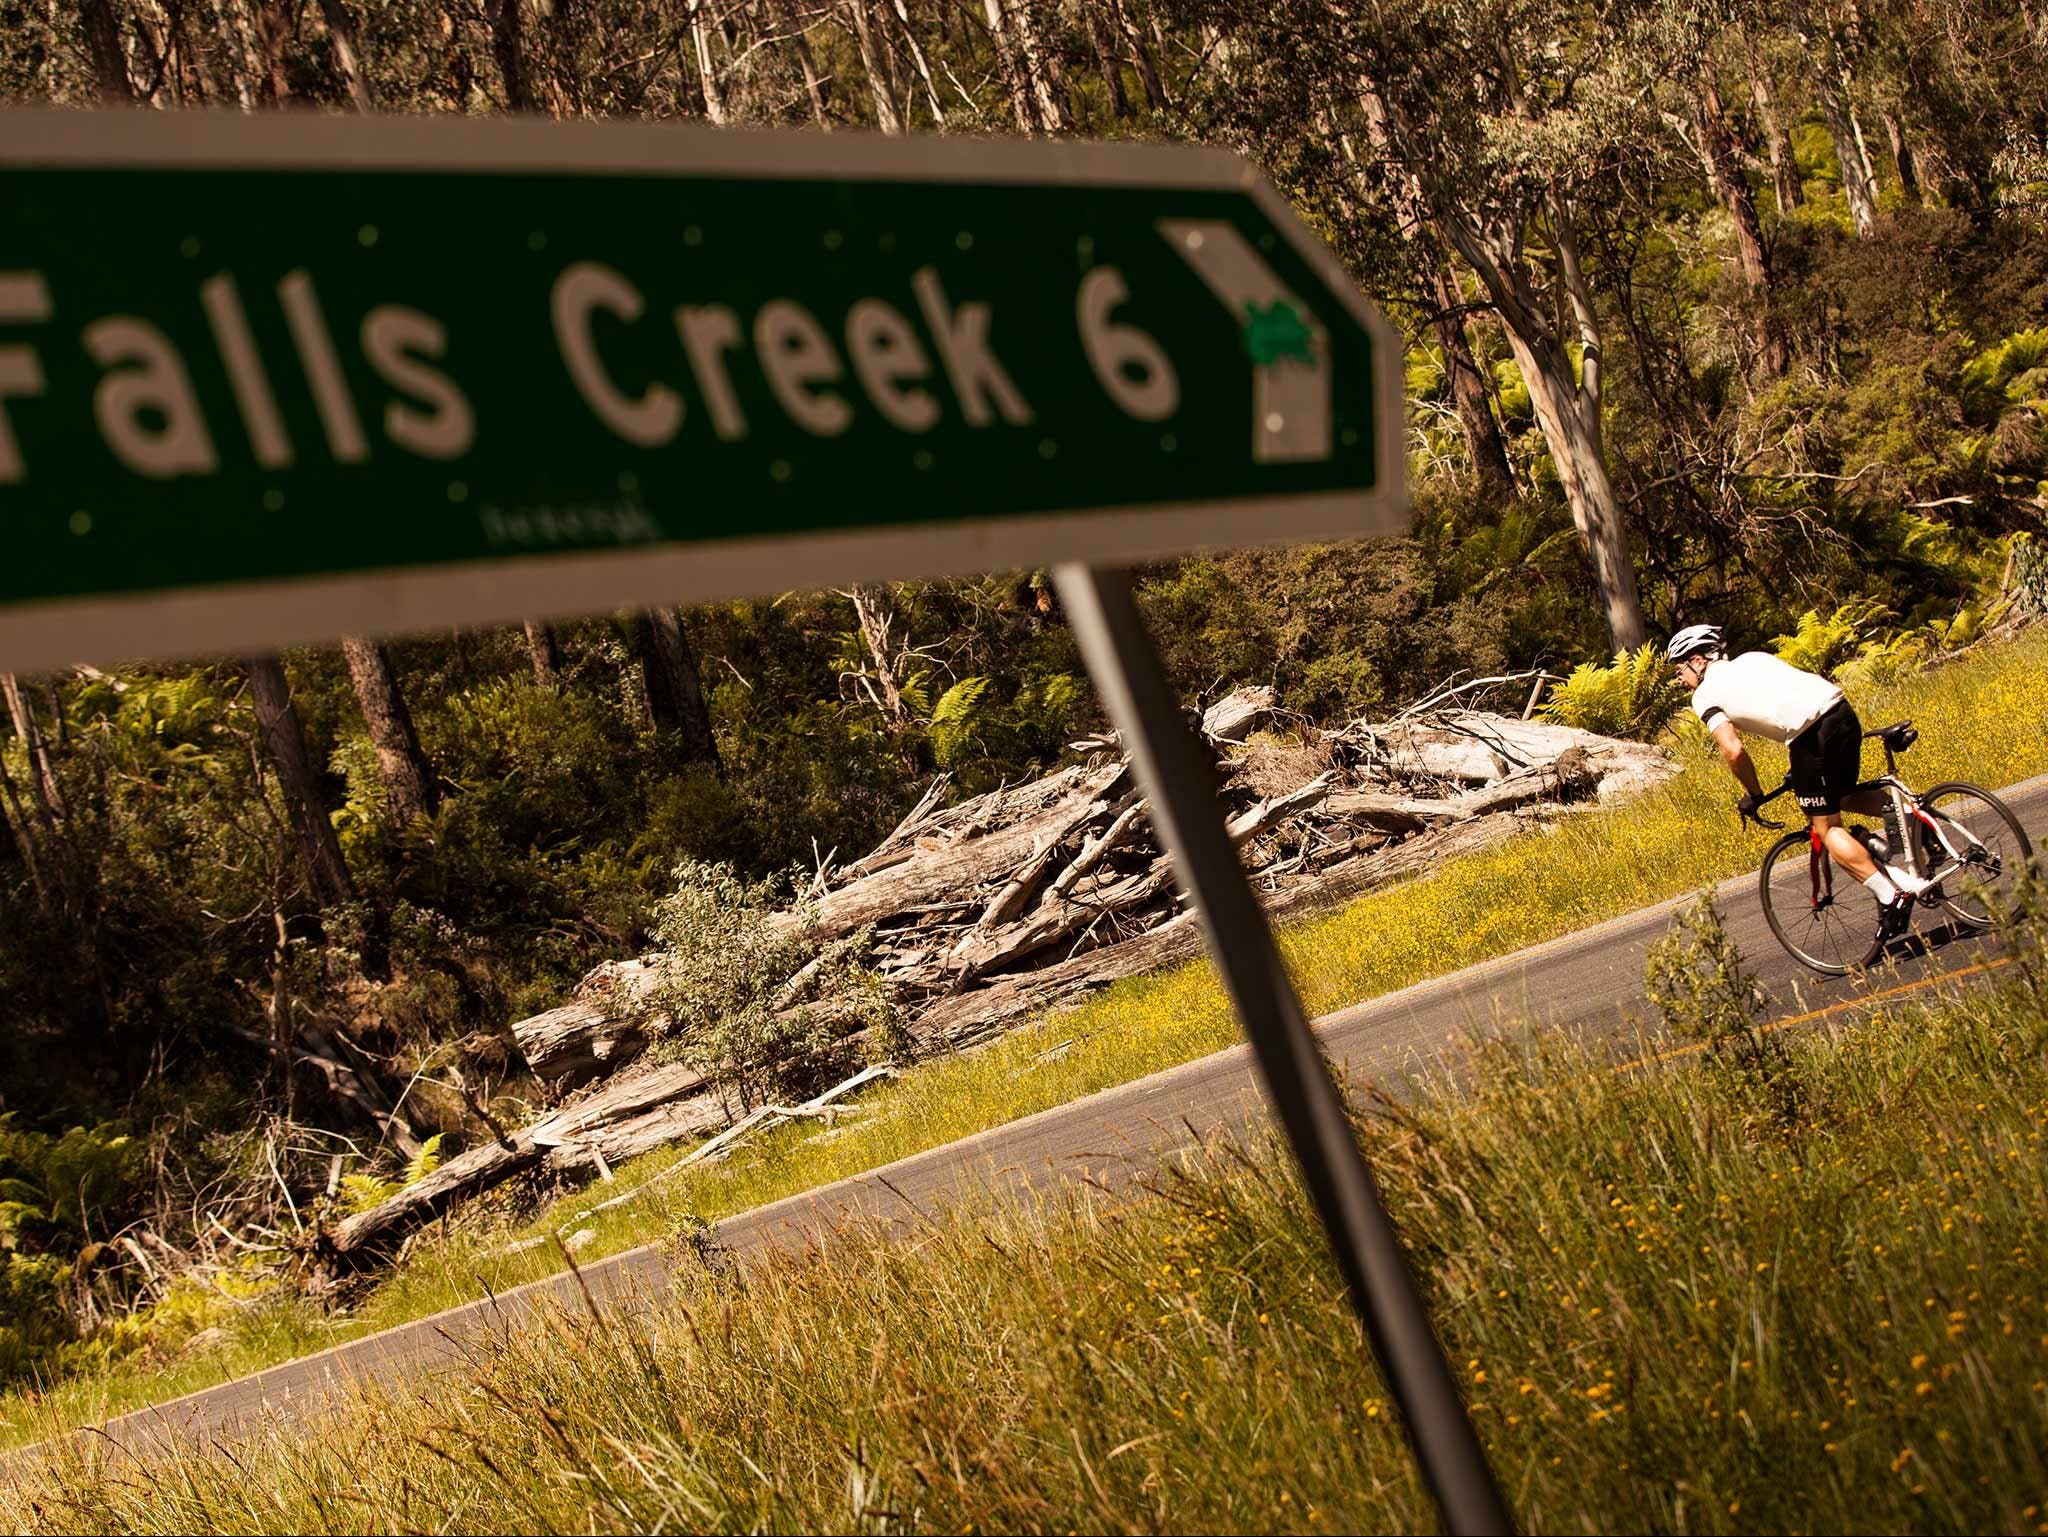 7 Peaks Ride - Falls Creek - Find Attractions